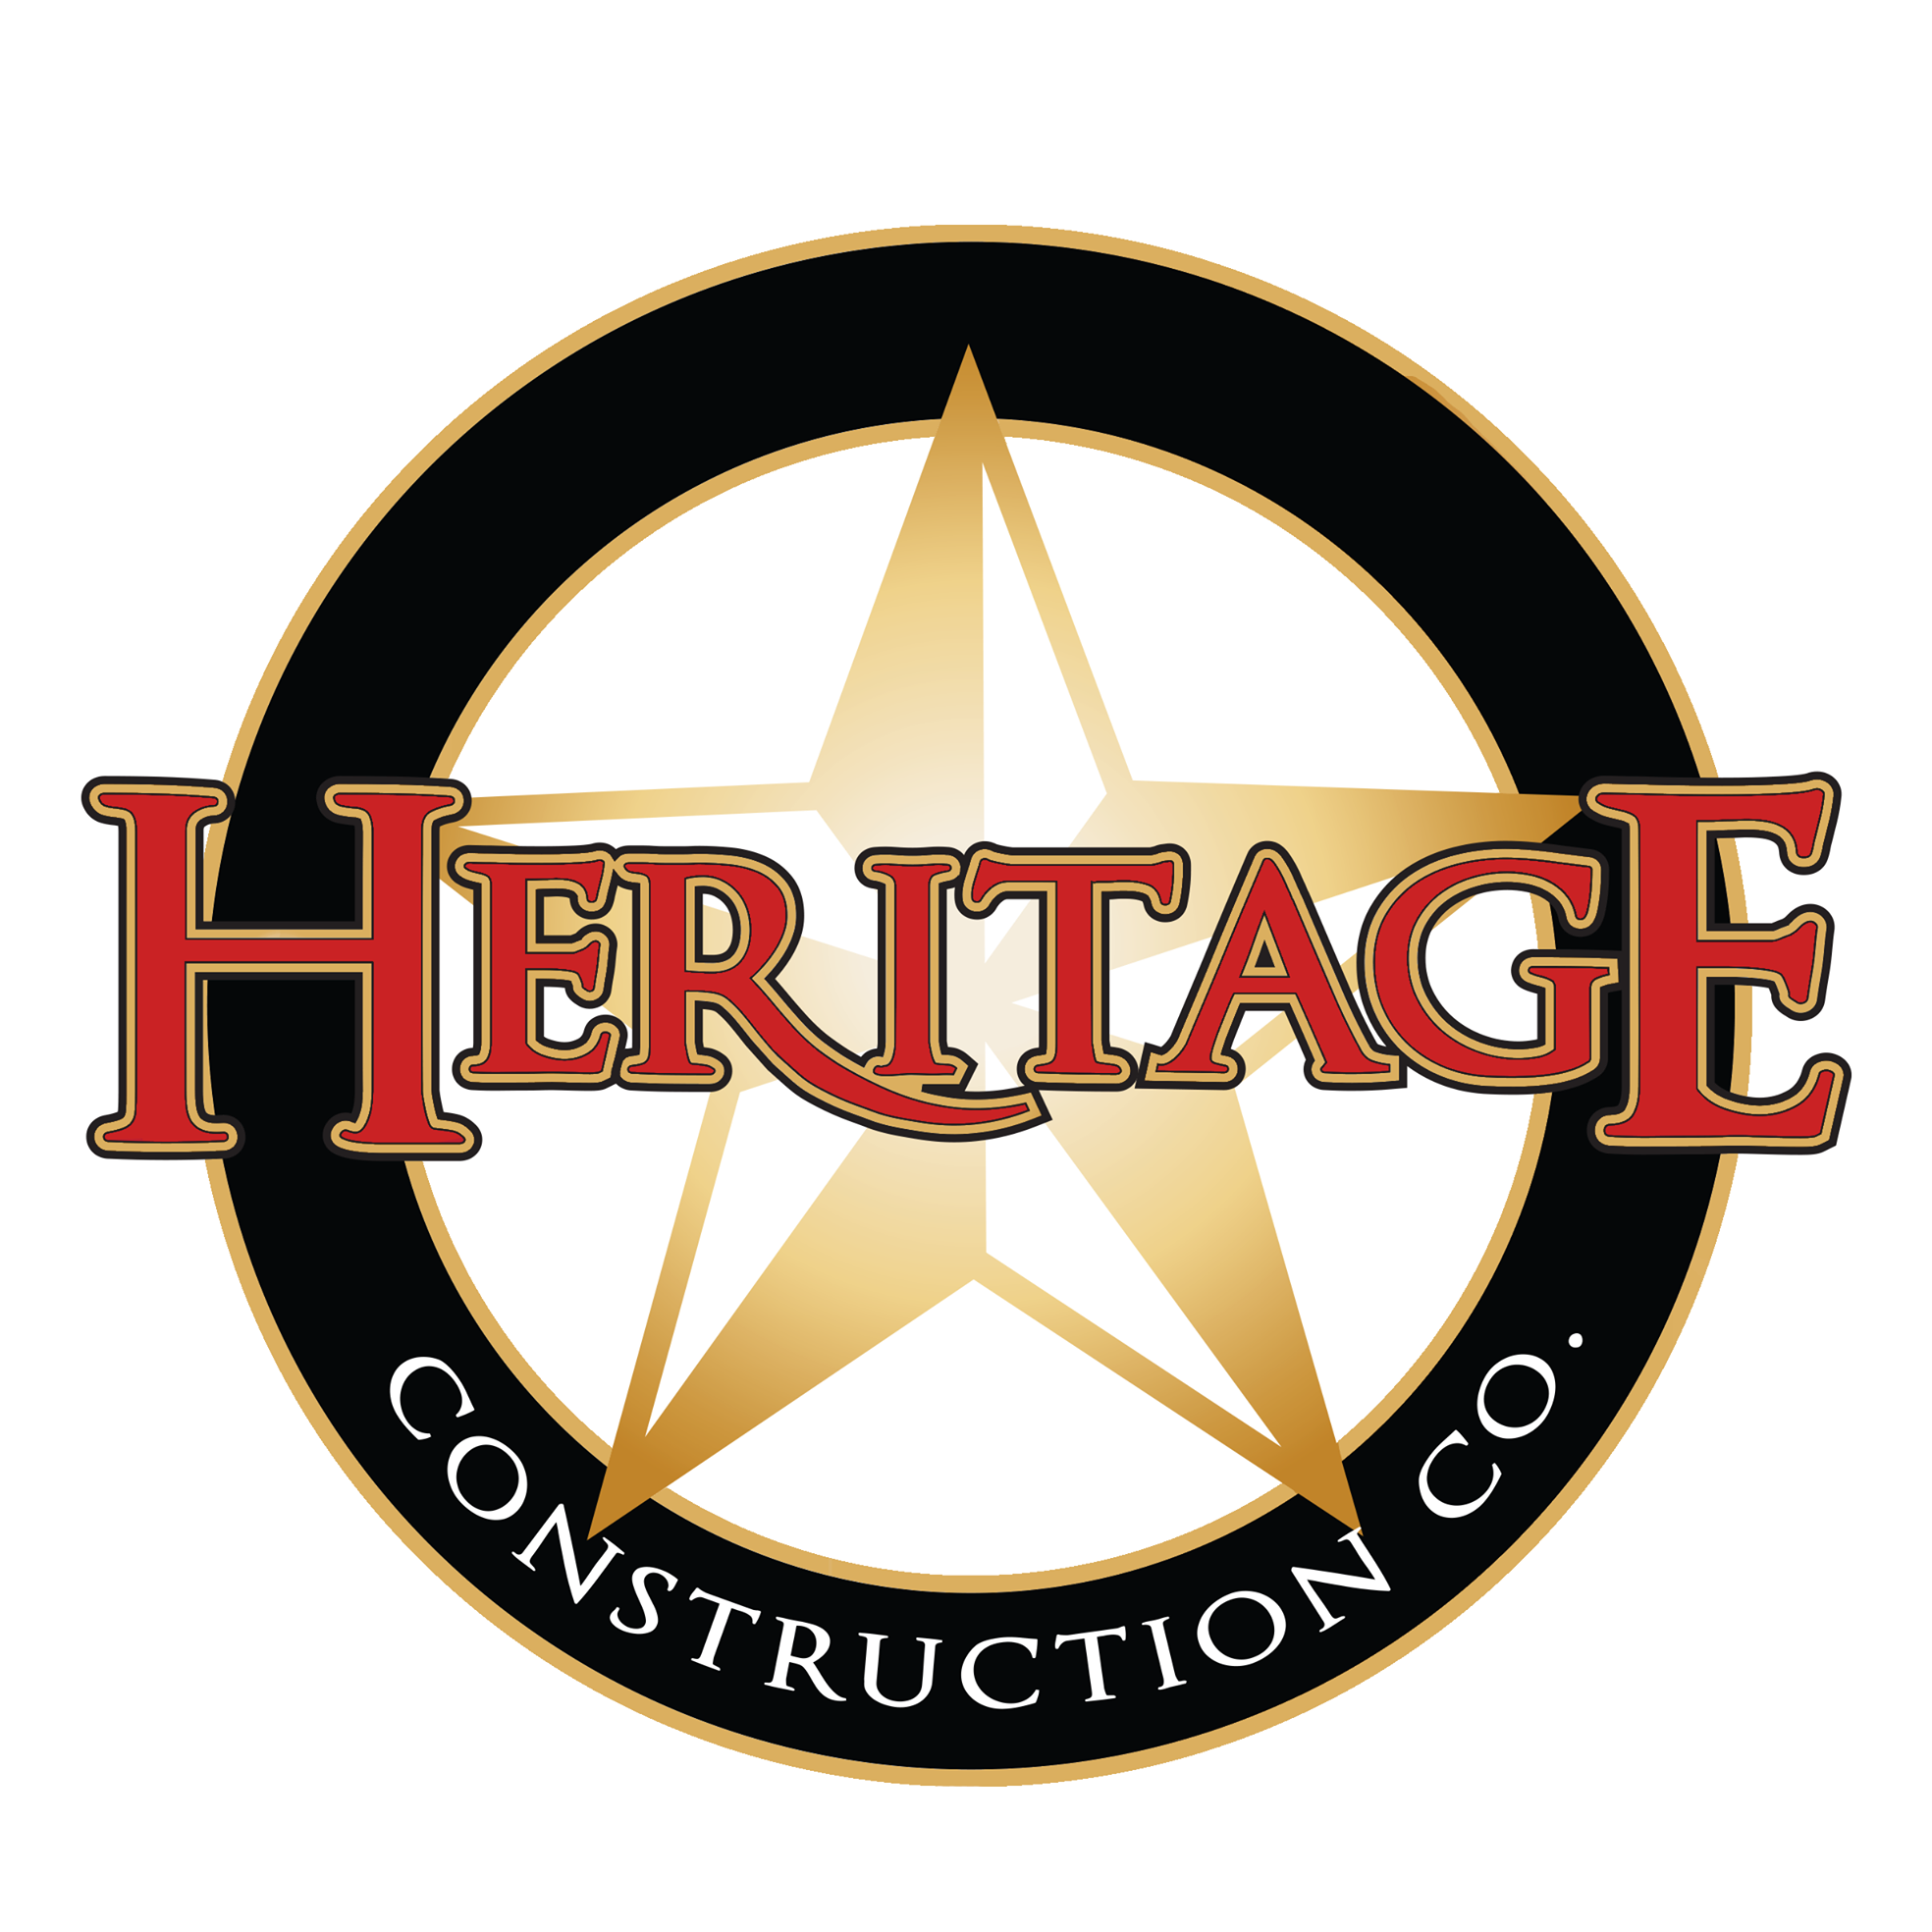 Company logo of Heritage Construction Co.